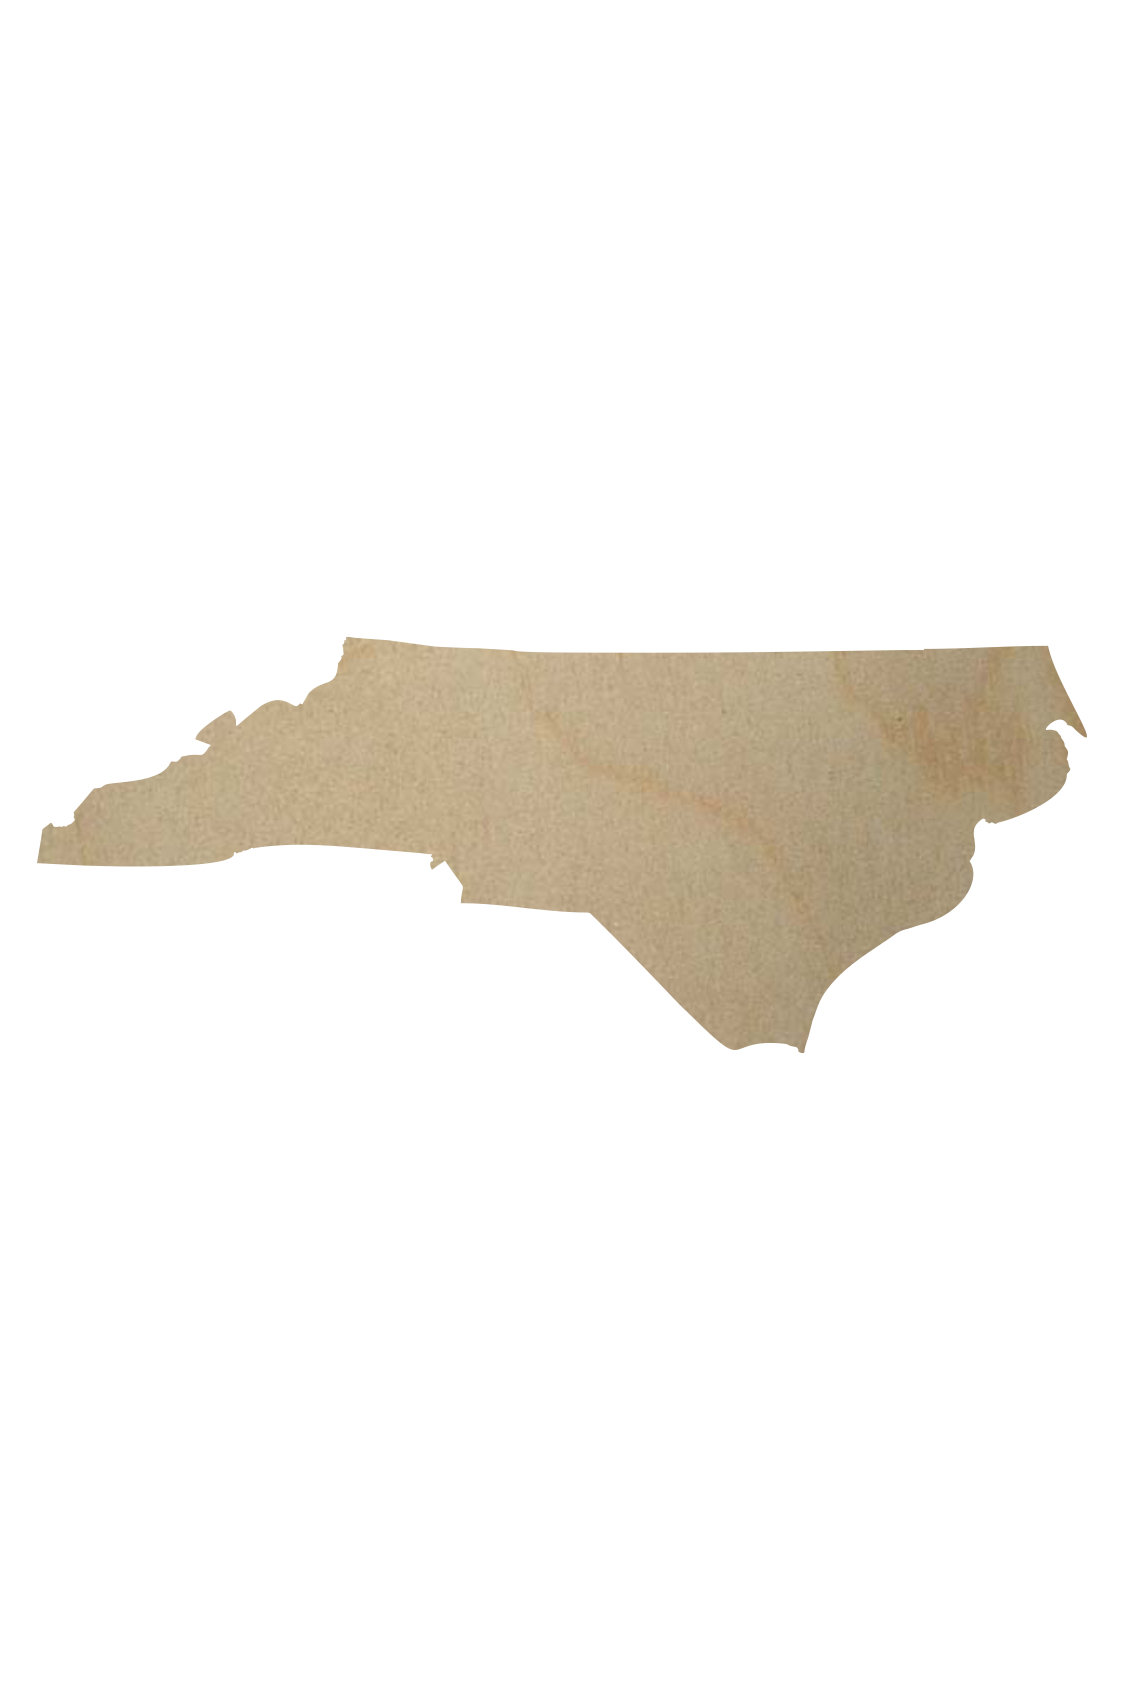 https://woodencutouts.com/wp-content/uploads/2016/07/North-Carolina.png